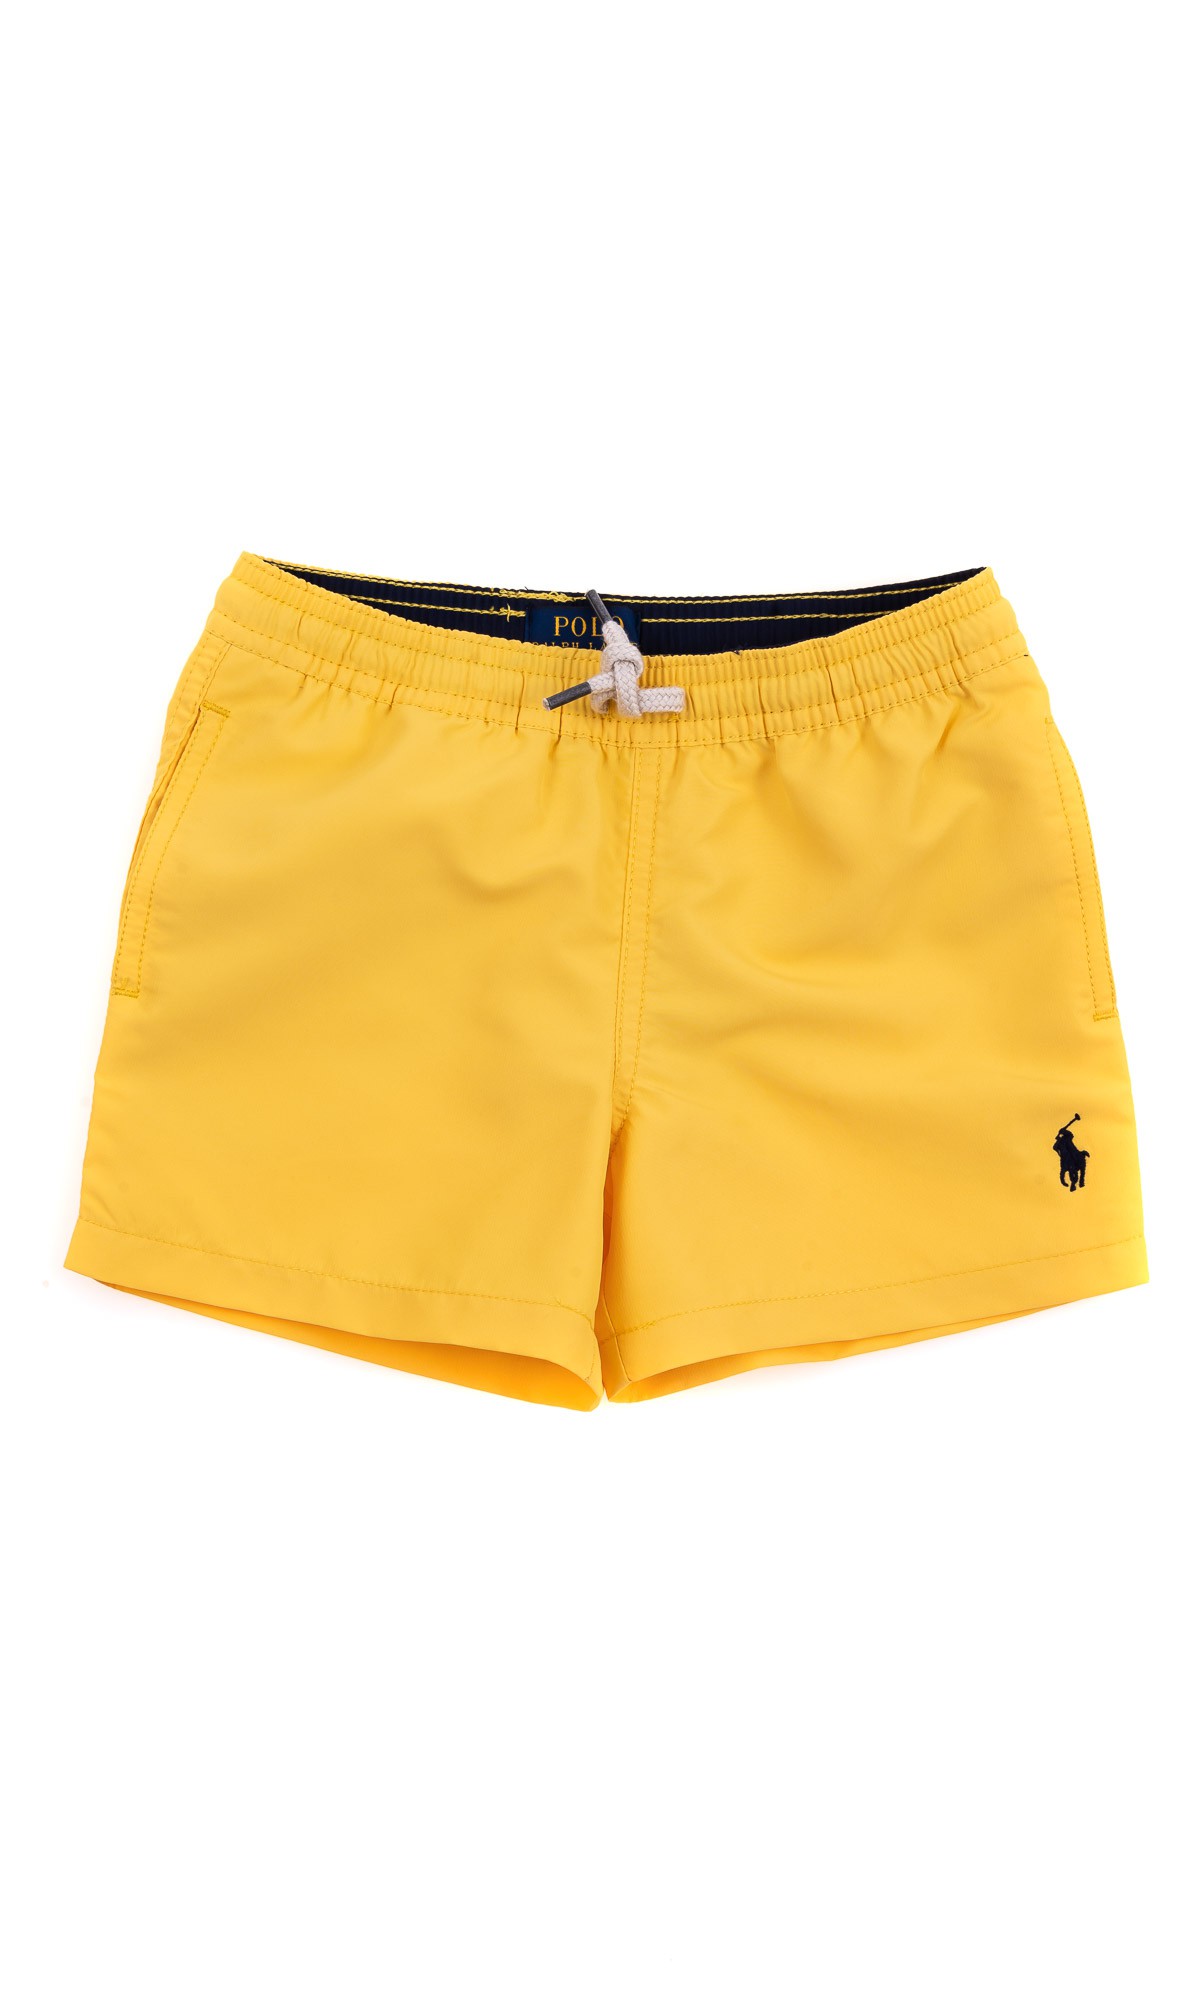 Yellow swim shorts, Polo Ralph Lauren - Celebrity-Club